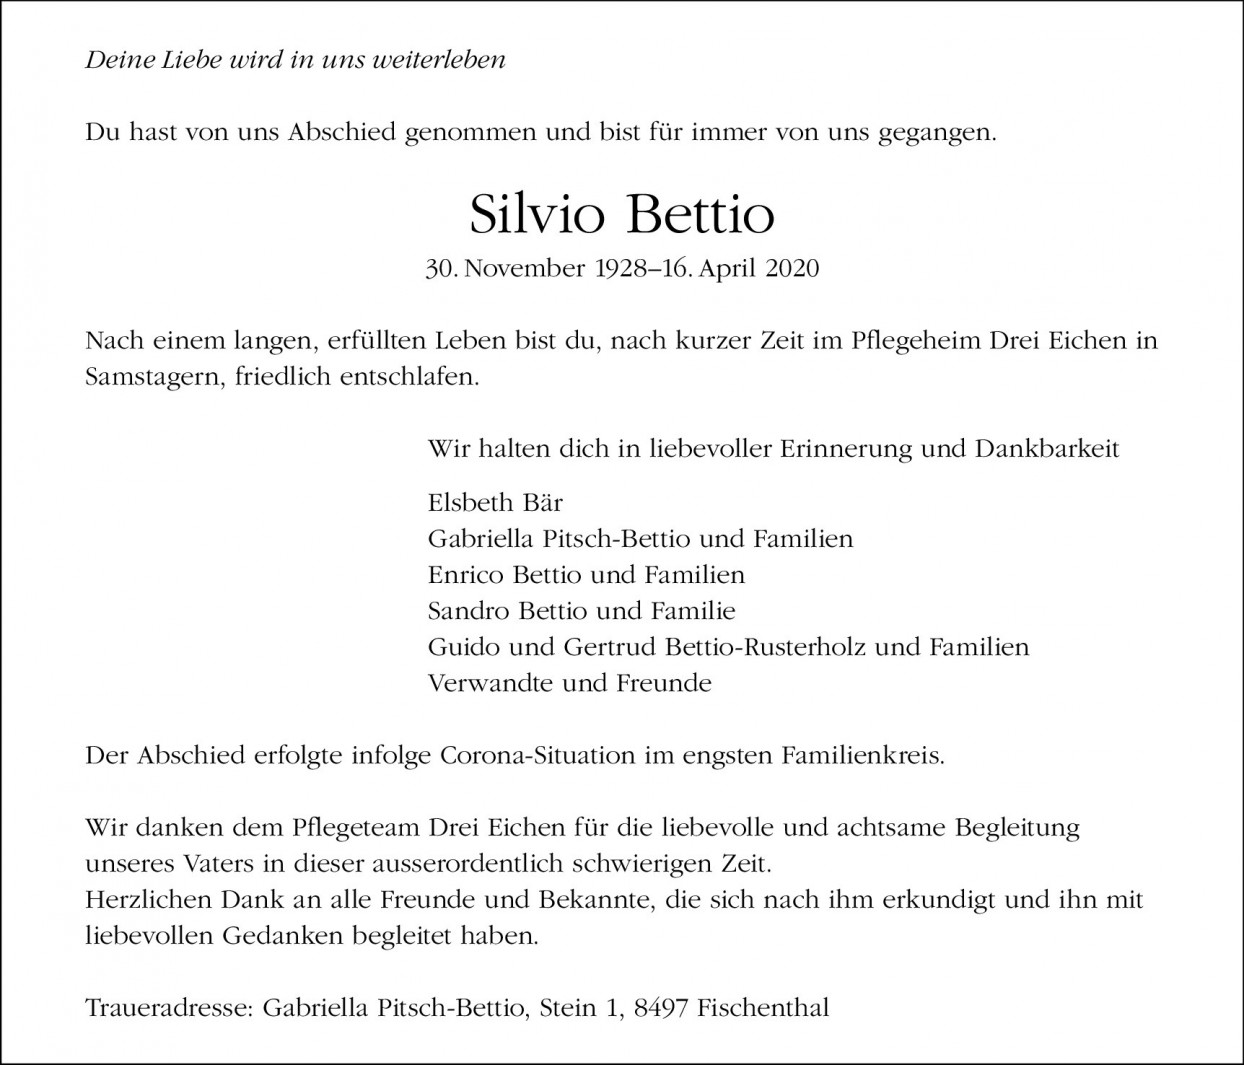 Silvio Bettio